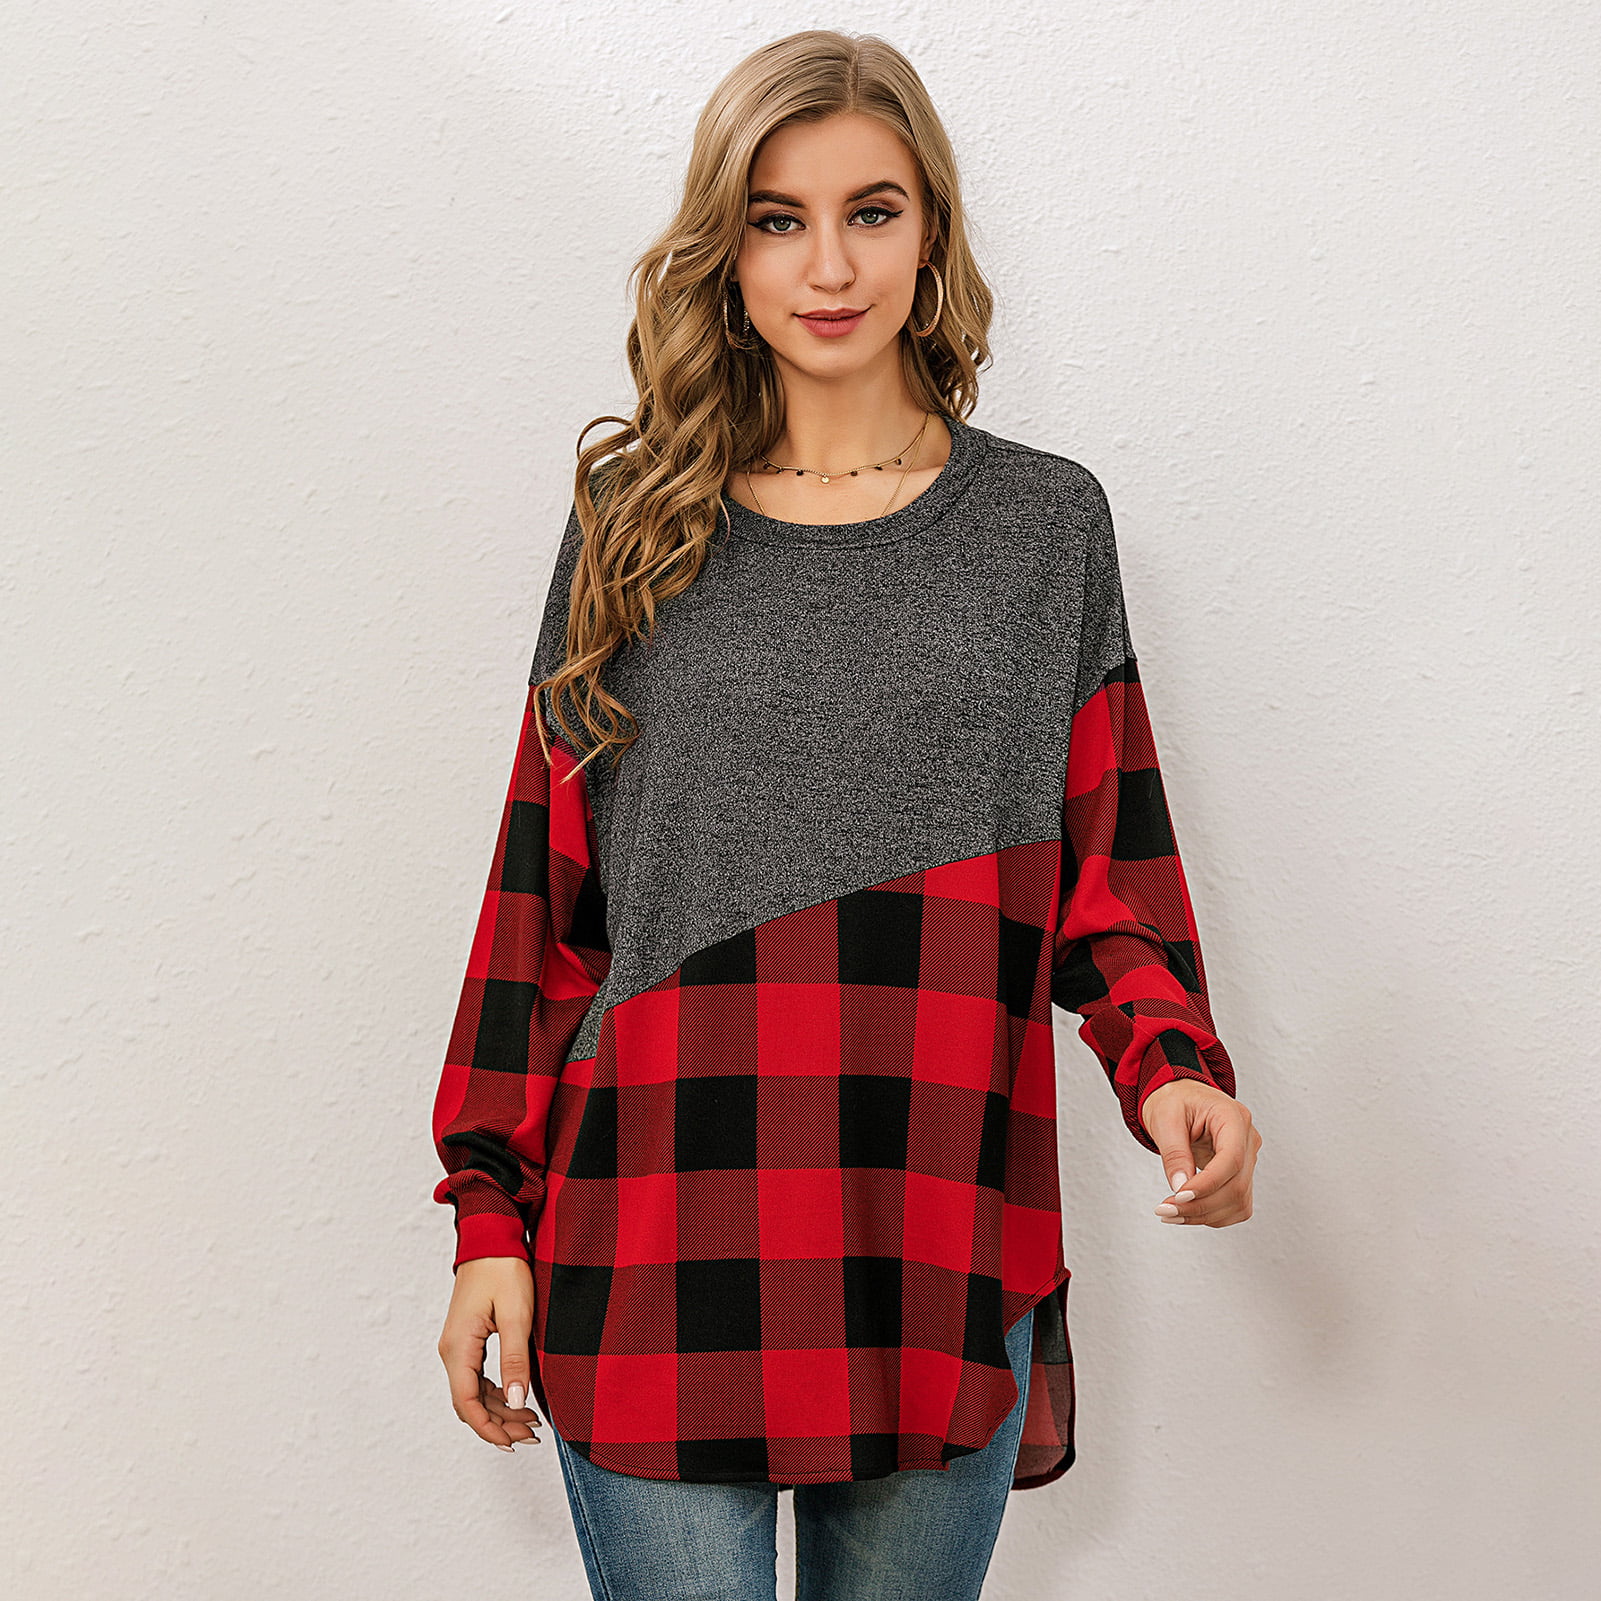 Womens Plaid Printed Top Autumn Long Raglan Sleeve O-Neck Casual Sweatshirt Tops Pullover